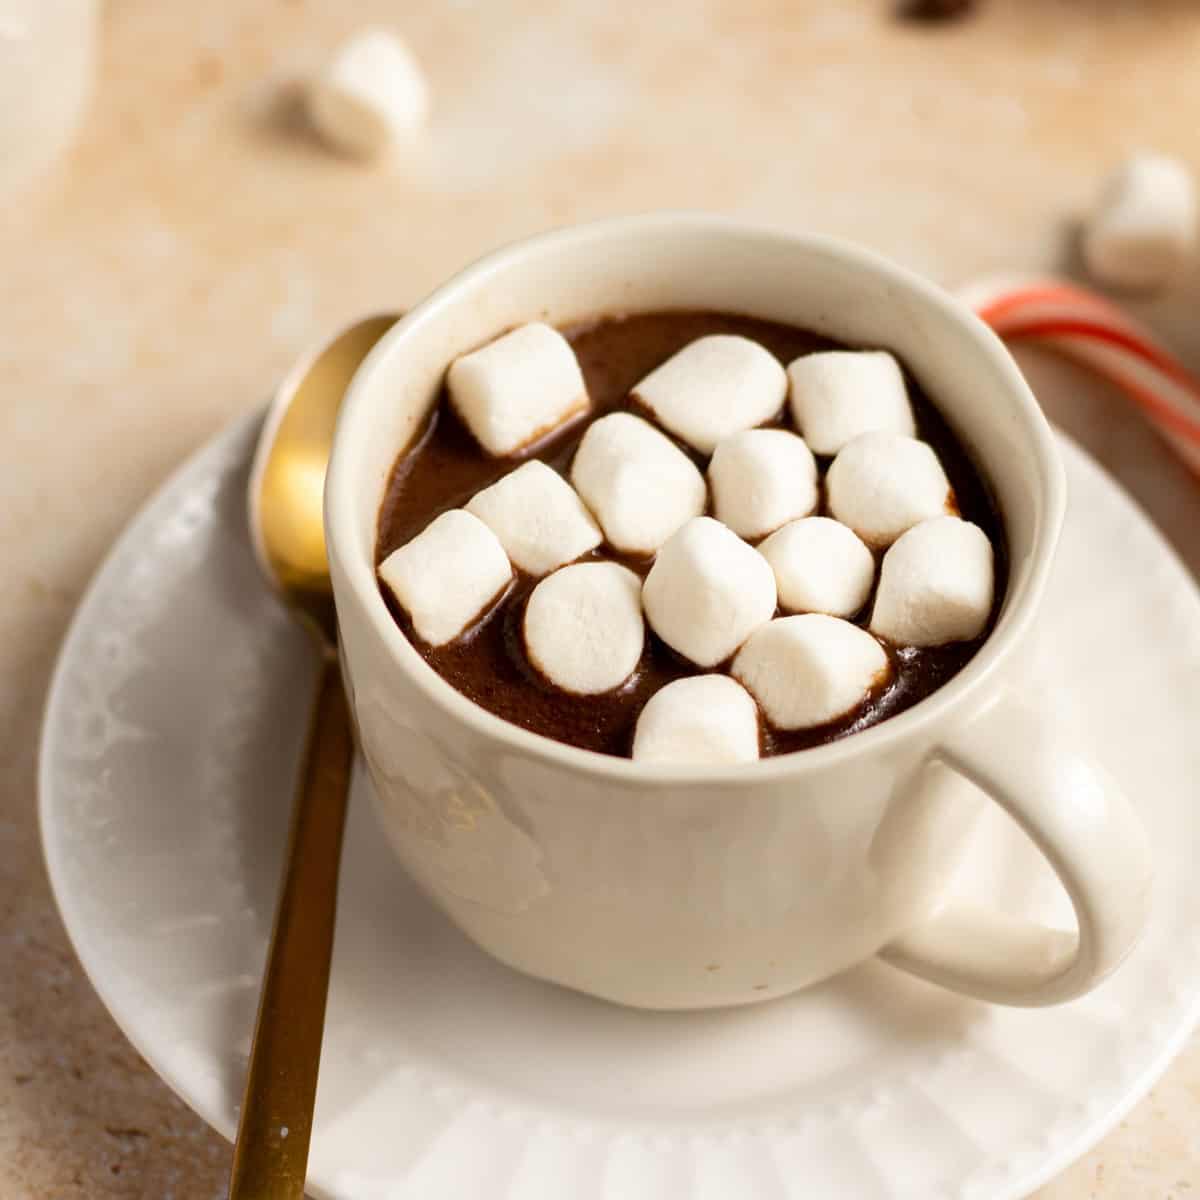 https://tastyoven.com/wp-content/uploads/2022/01/instant-pot-hot-cocoa-image.jpg